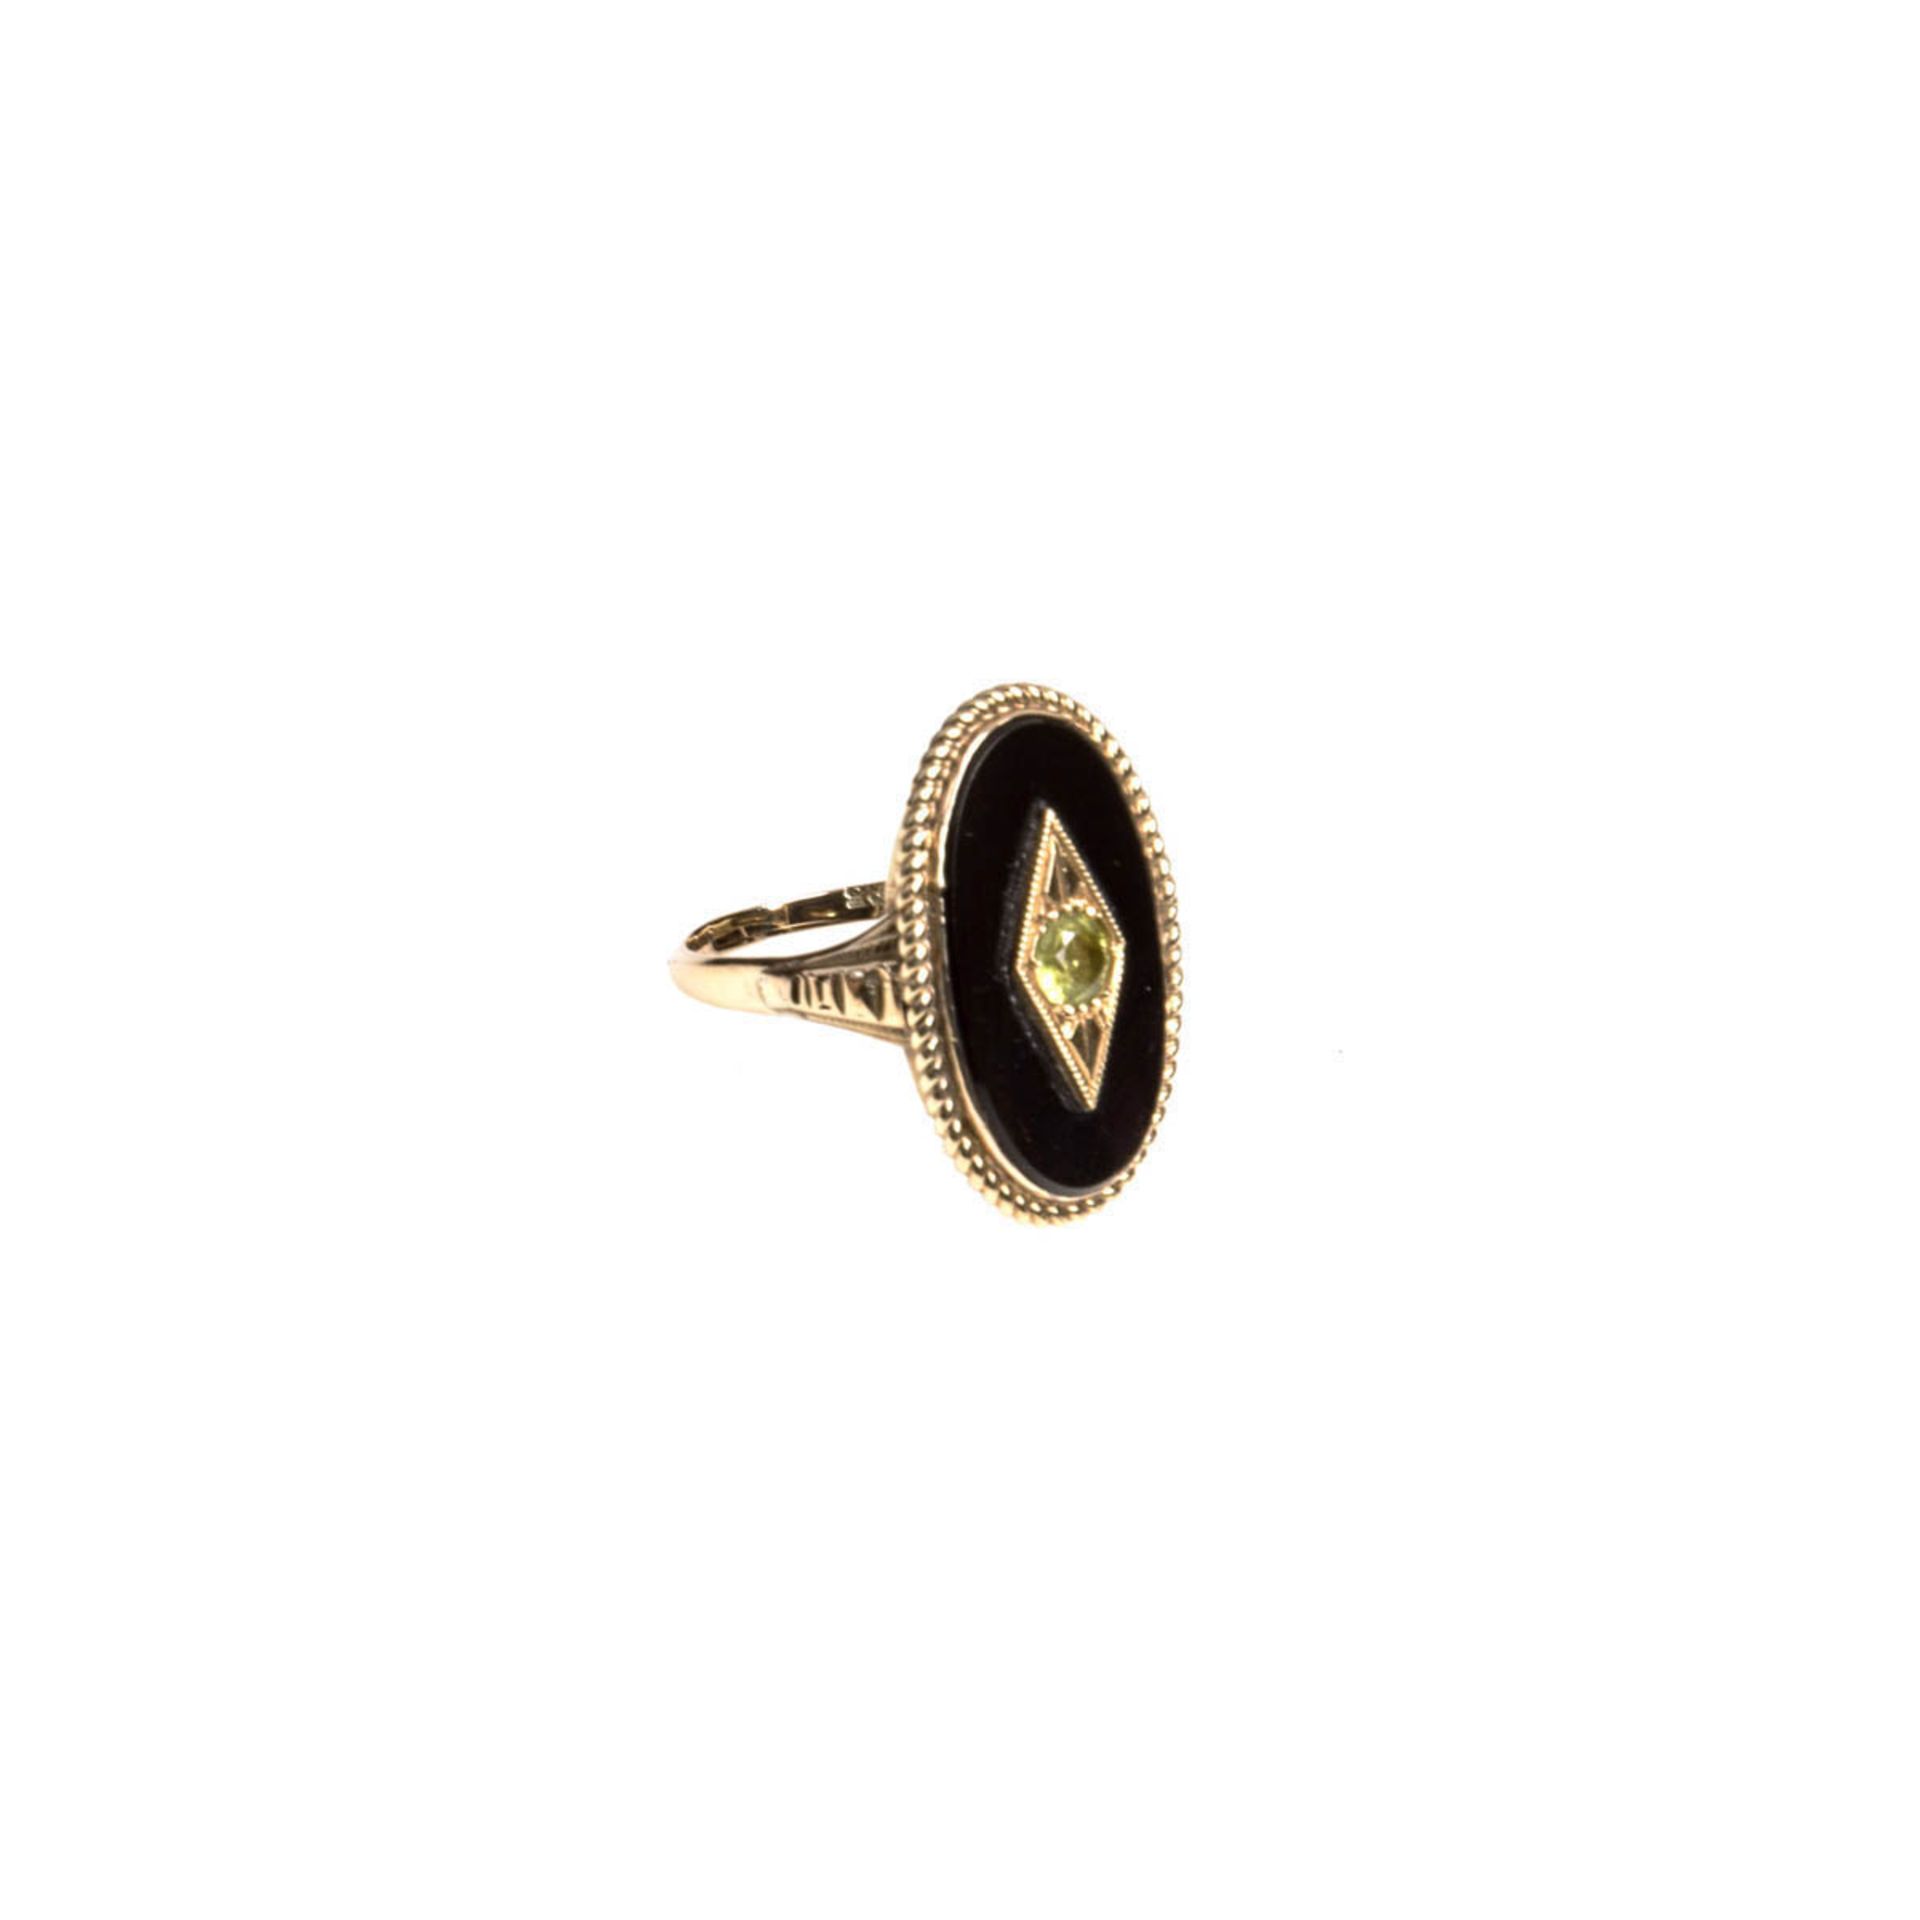 Ring mit Onyx und Peridot 585er Gelbgold. Schmale Ringschiene, hochovaler Ringkopf mit ovaler Onyx-